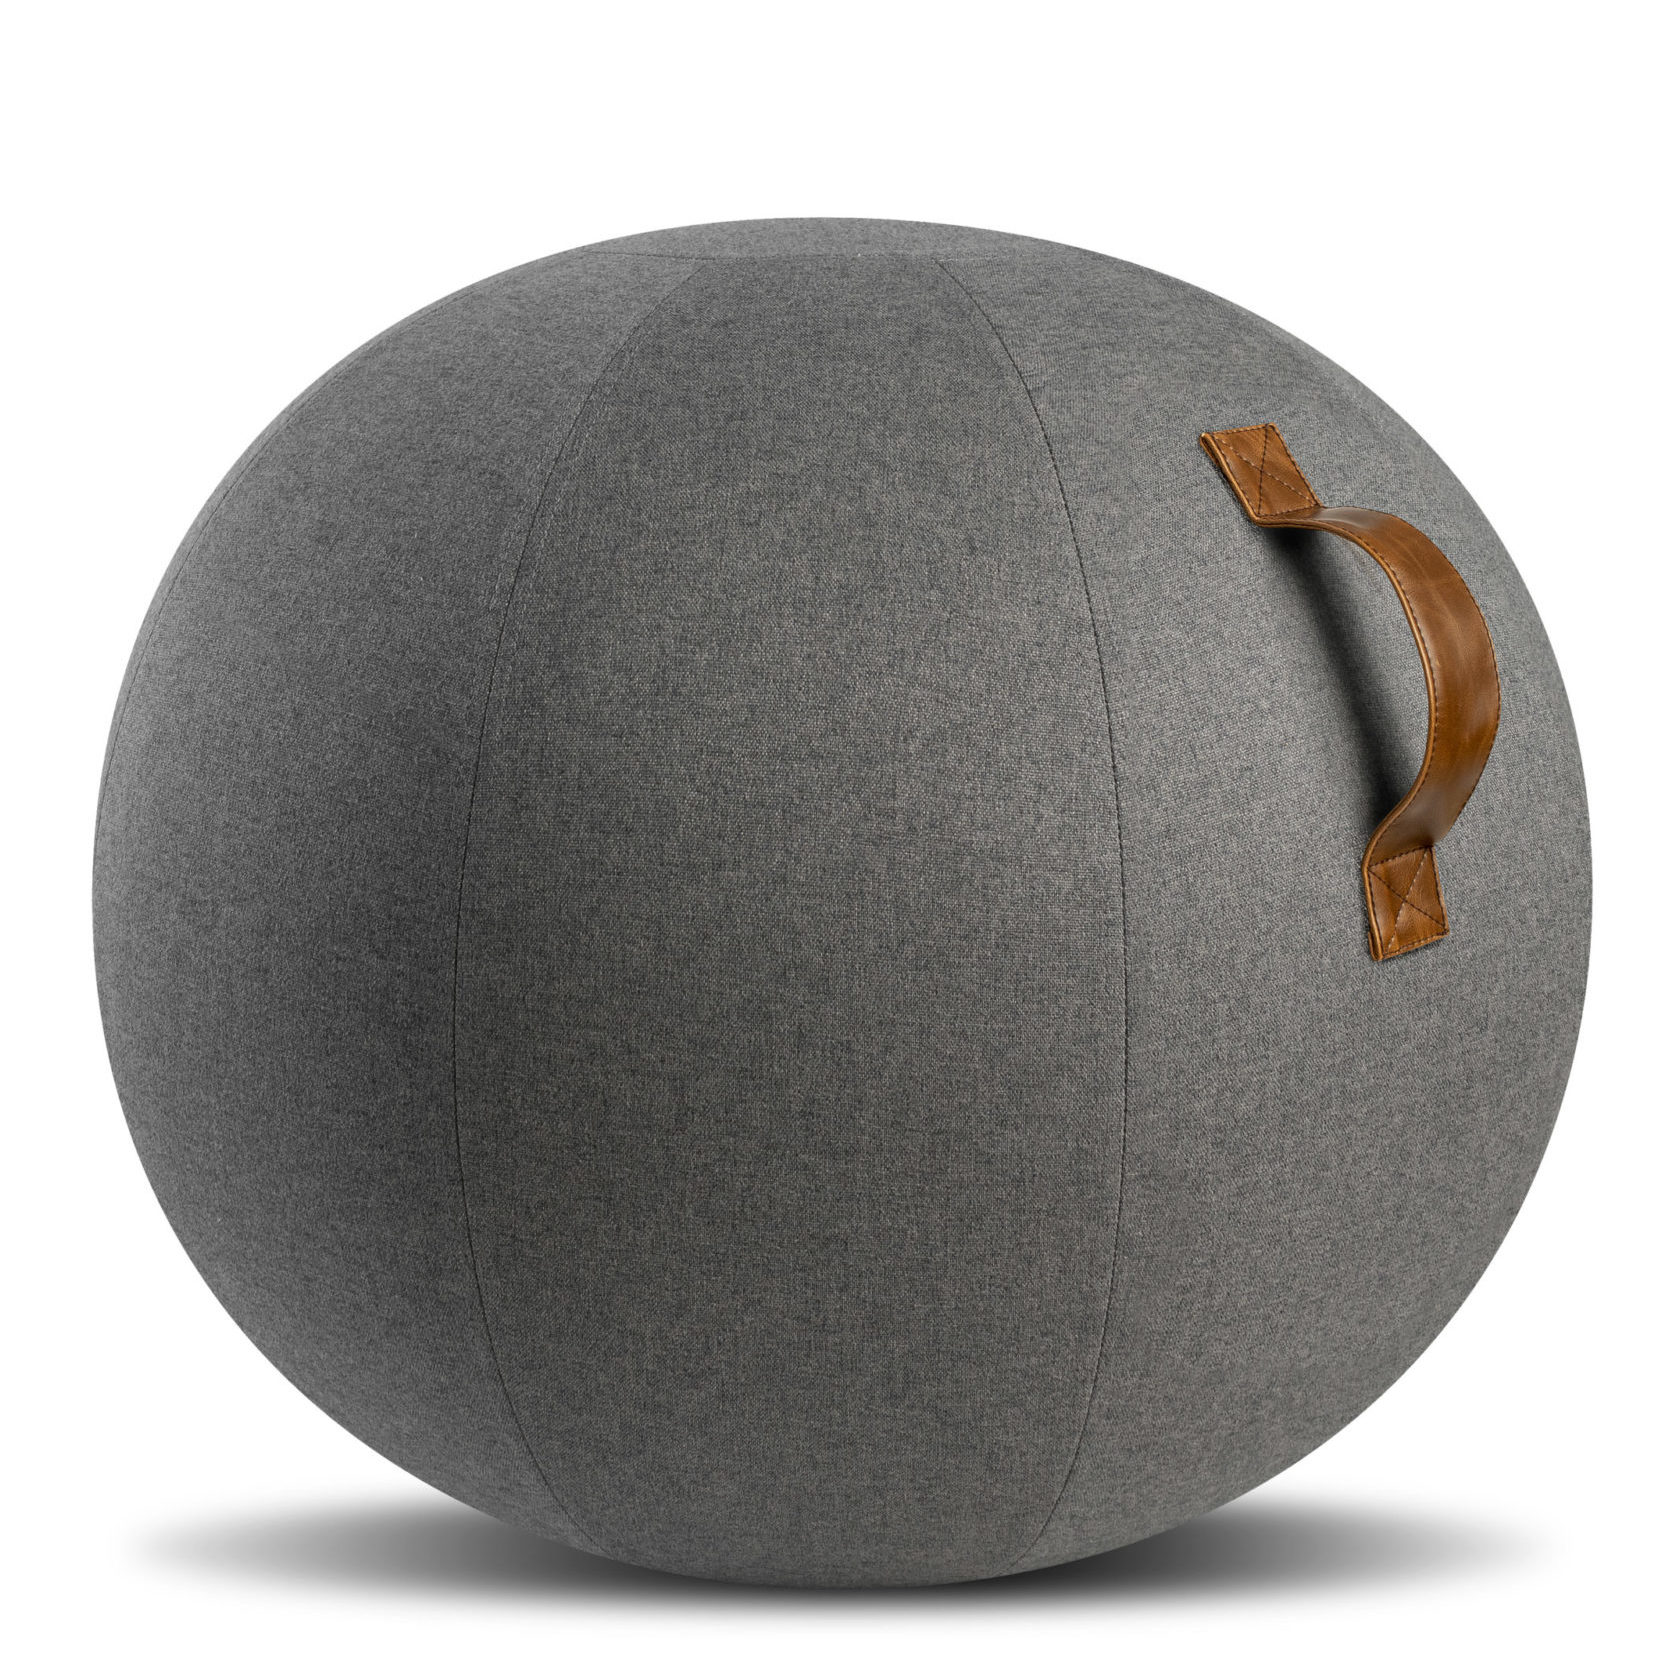 mörkgrå balansboll i tyg|Coreball Icon - Balansboll Design Mörkgrå - miljöbild|Coreball Icon - Balansboll Design Mörkgrå - miljöbild|Balansboll Design Mörkgrå för kontor och hemmamiljö